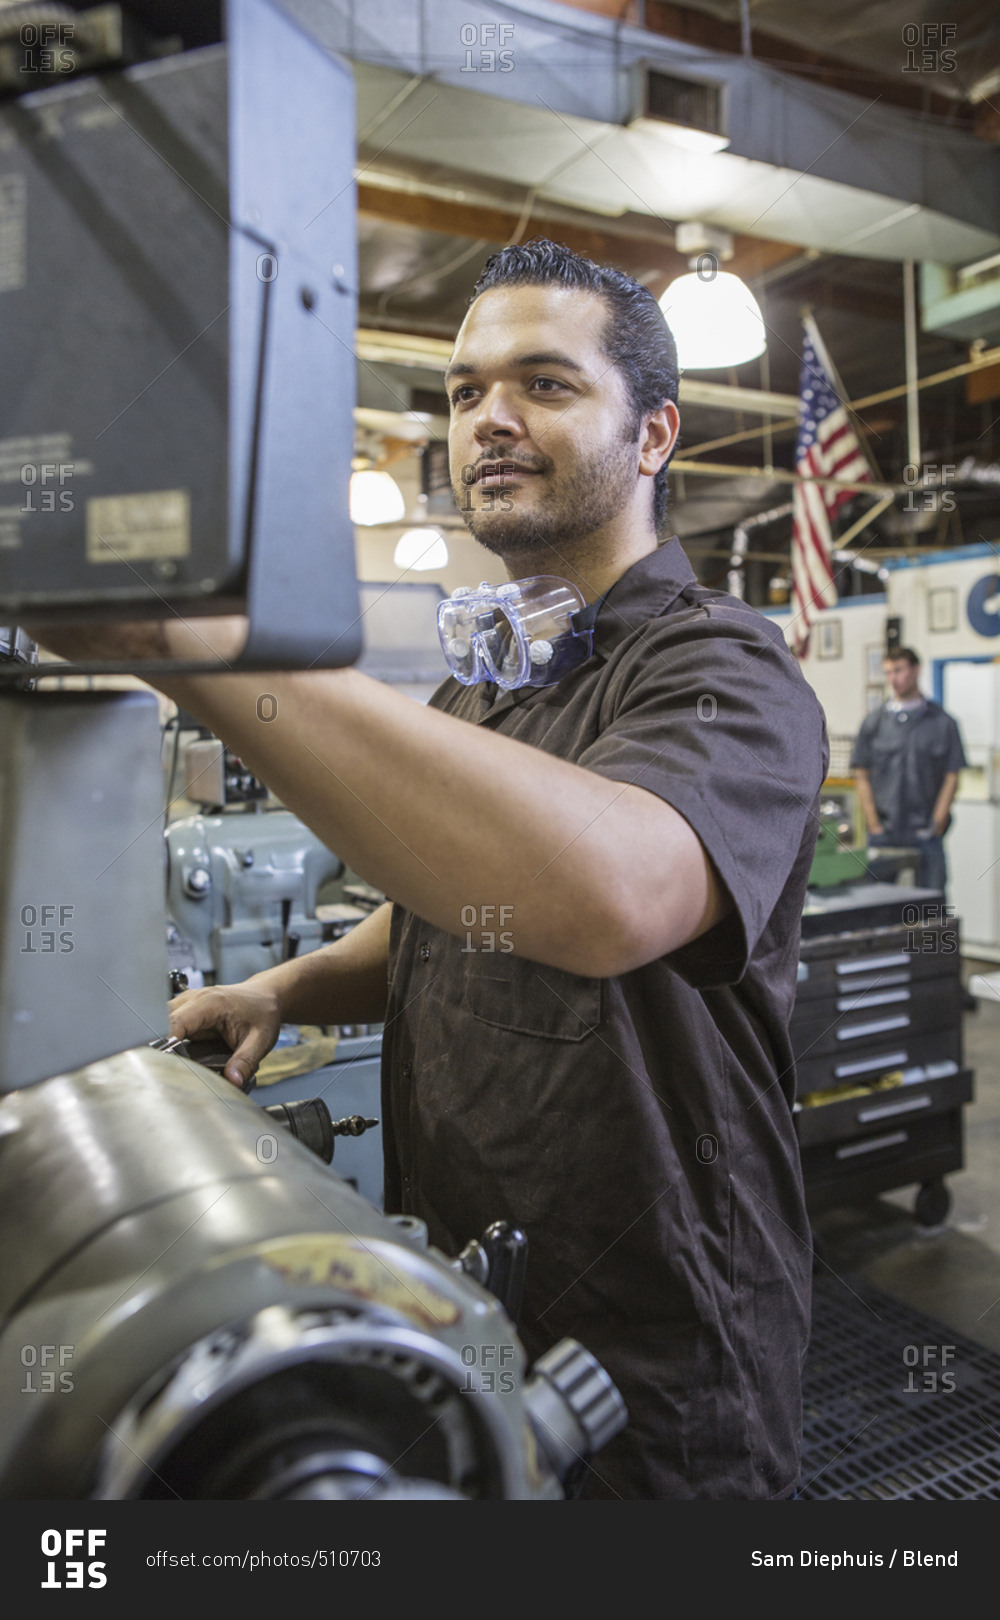 Hispanic worker operating machinery in factory